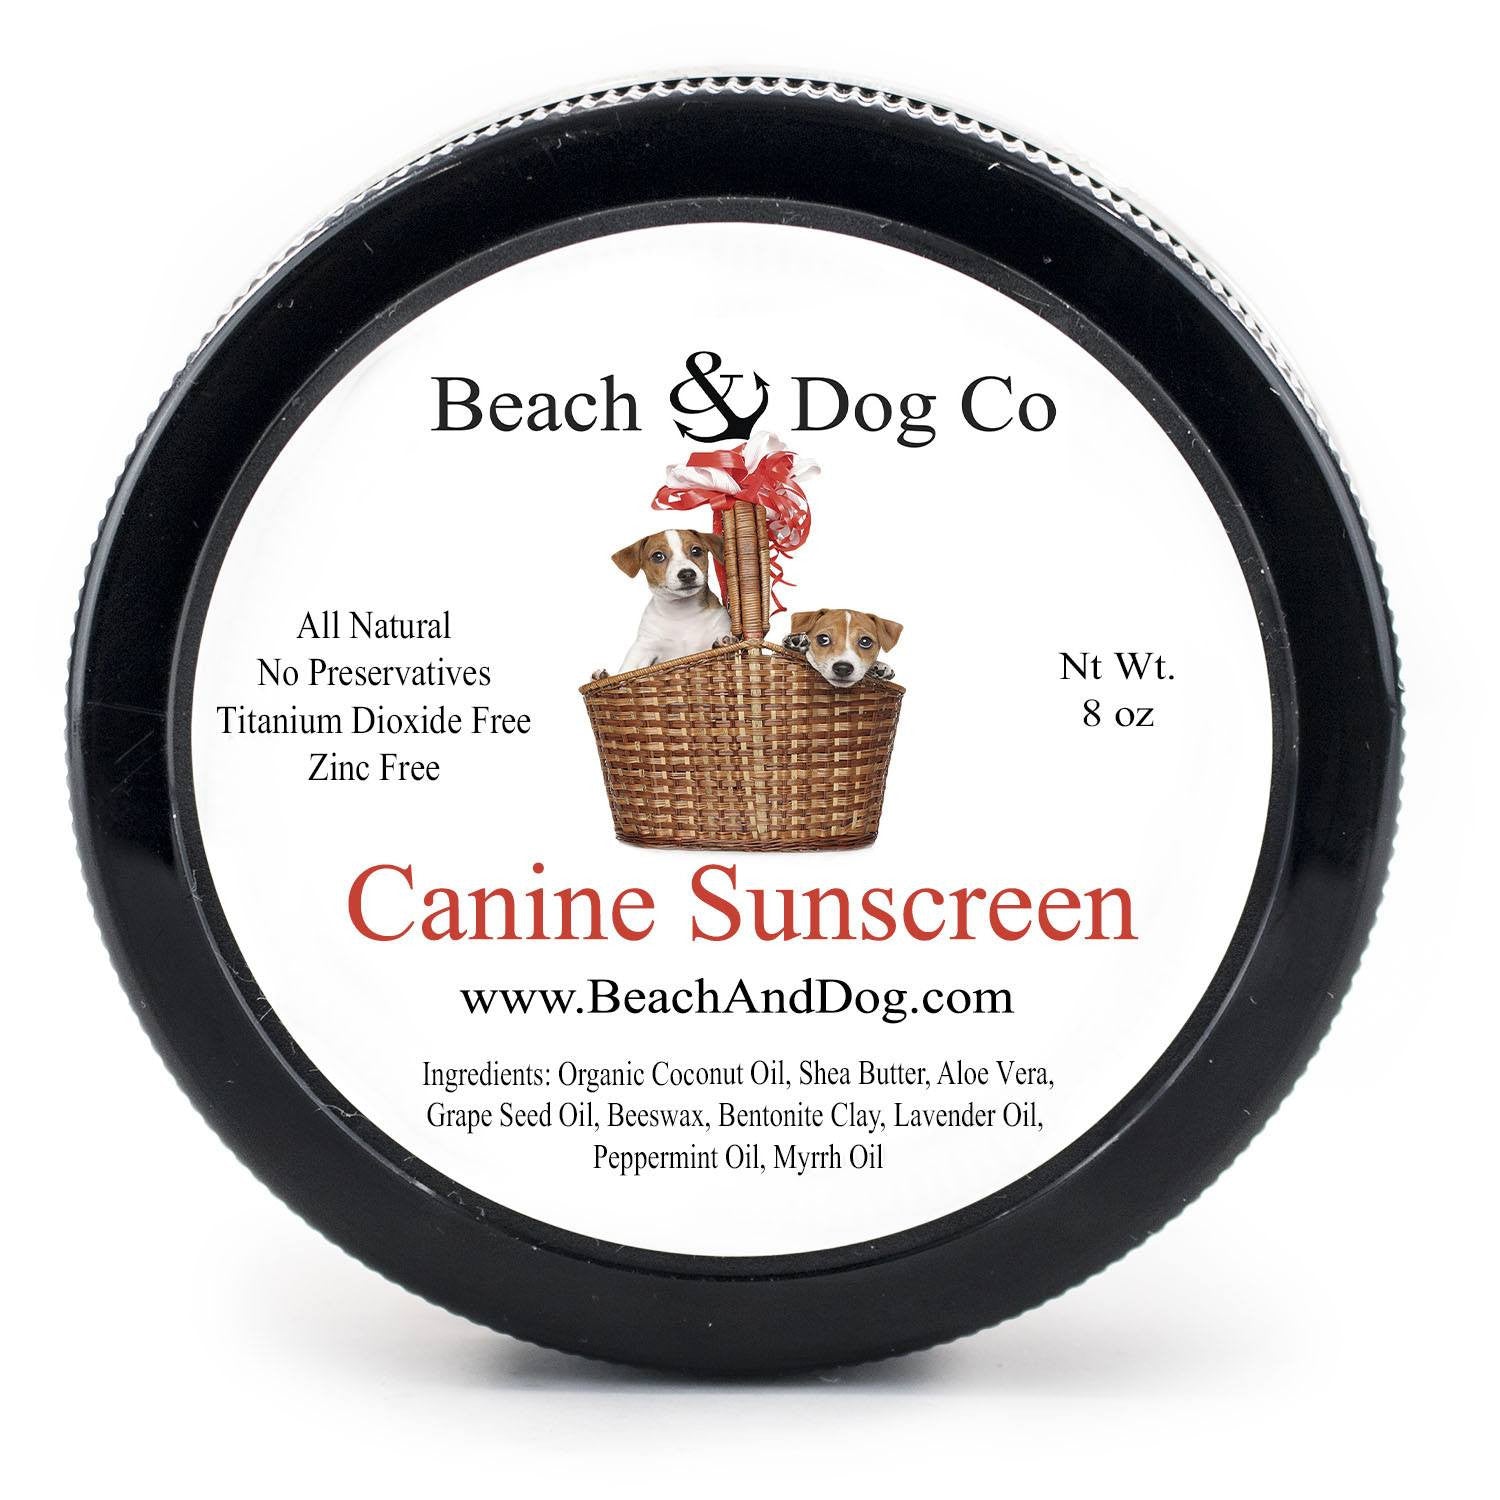 Canine Sunscreen (8 oz) Zinc and Titanium Dioxide Free - Beach & Dog Co.